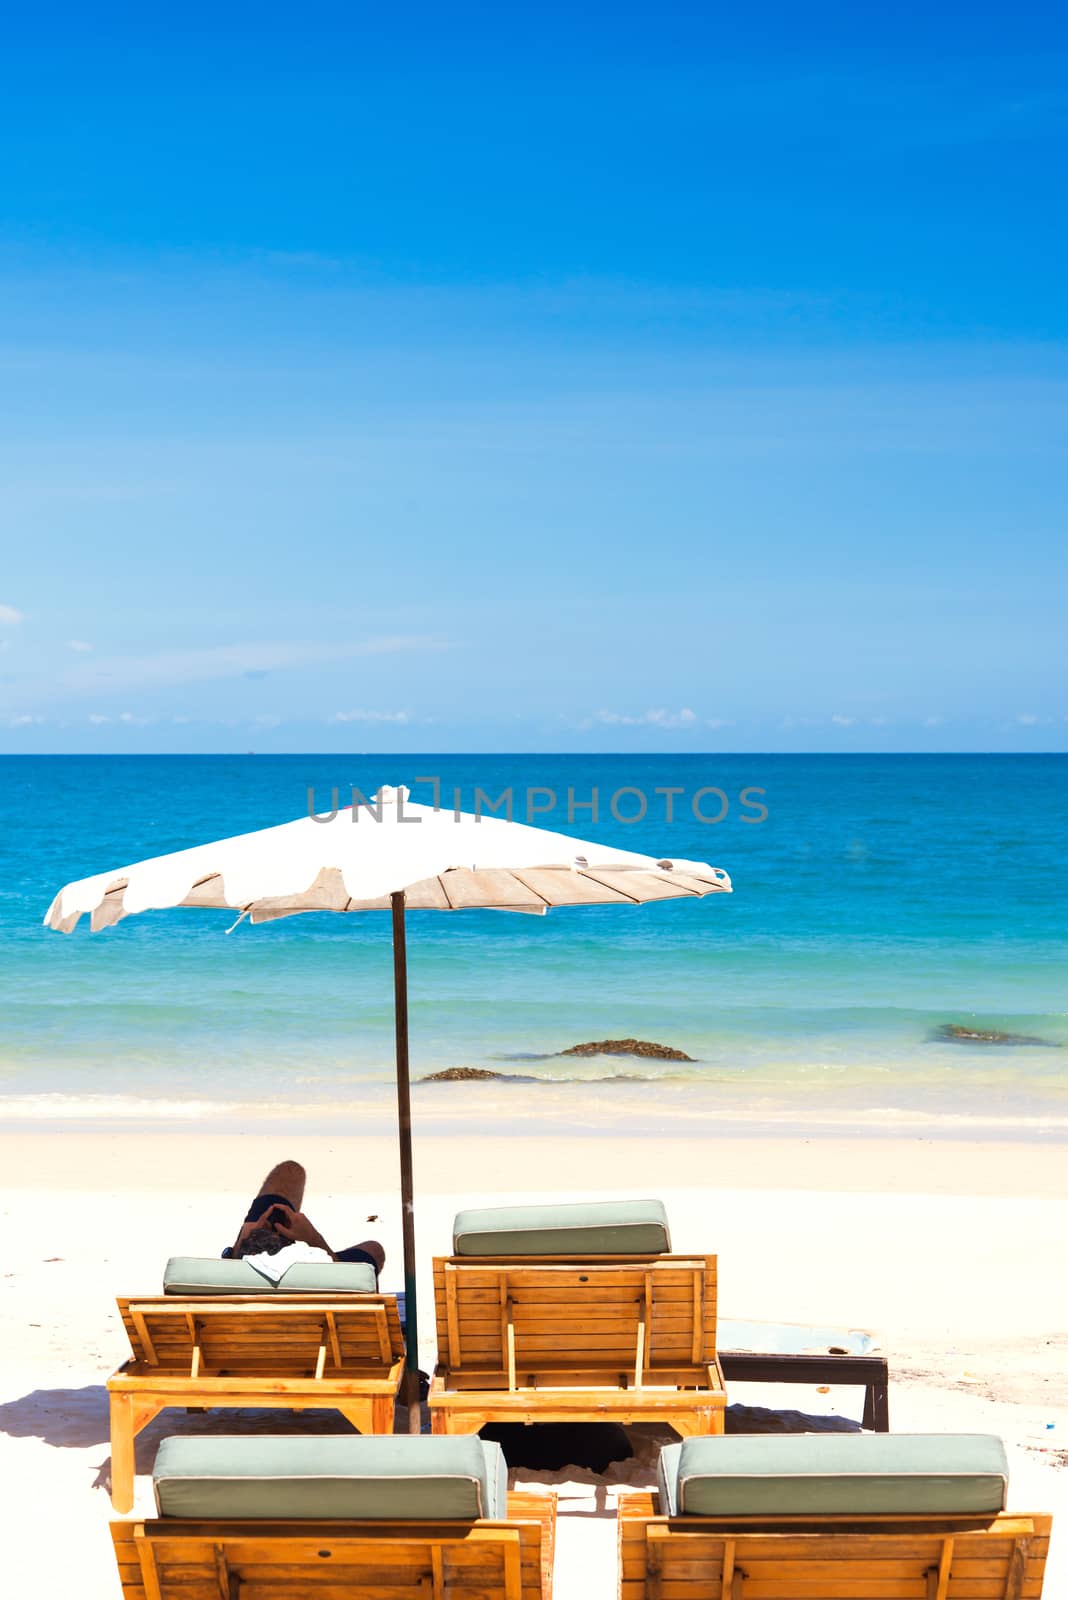 Beach chair and umbrella on sand beach. by jakgree